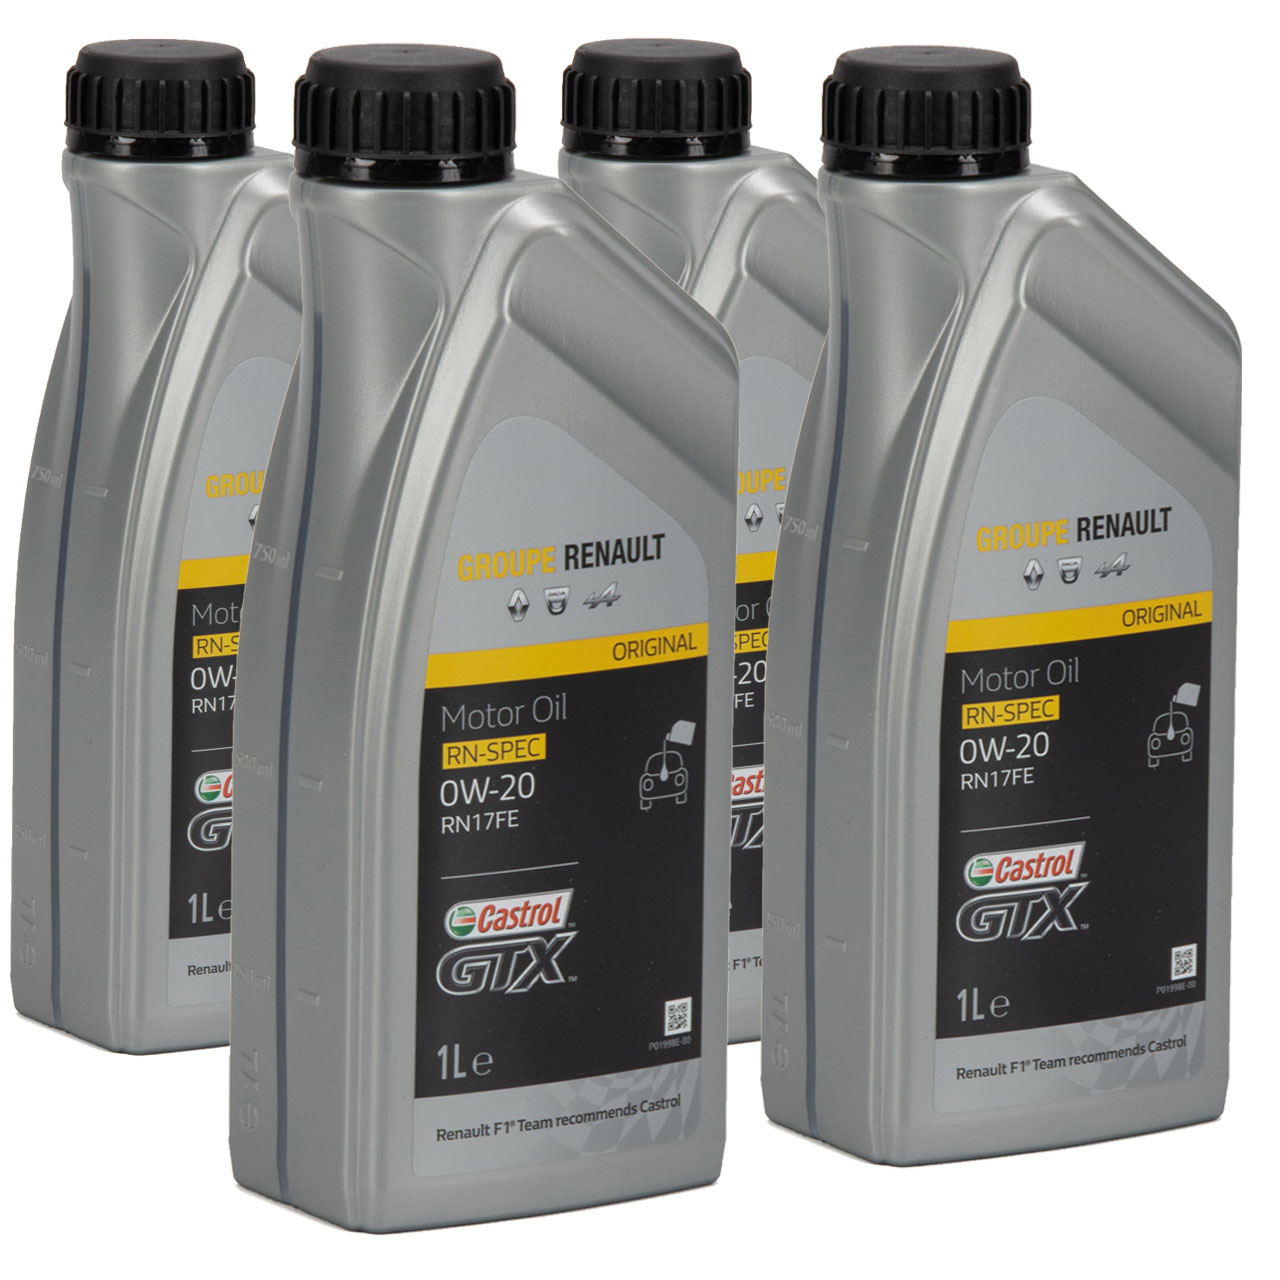 4L 4 Liter CASTROL Motoröl Öl GTX RN-SPEC 0W-20 0W20 für Renault RN17FE